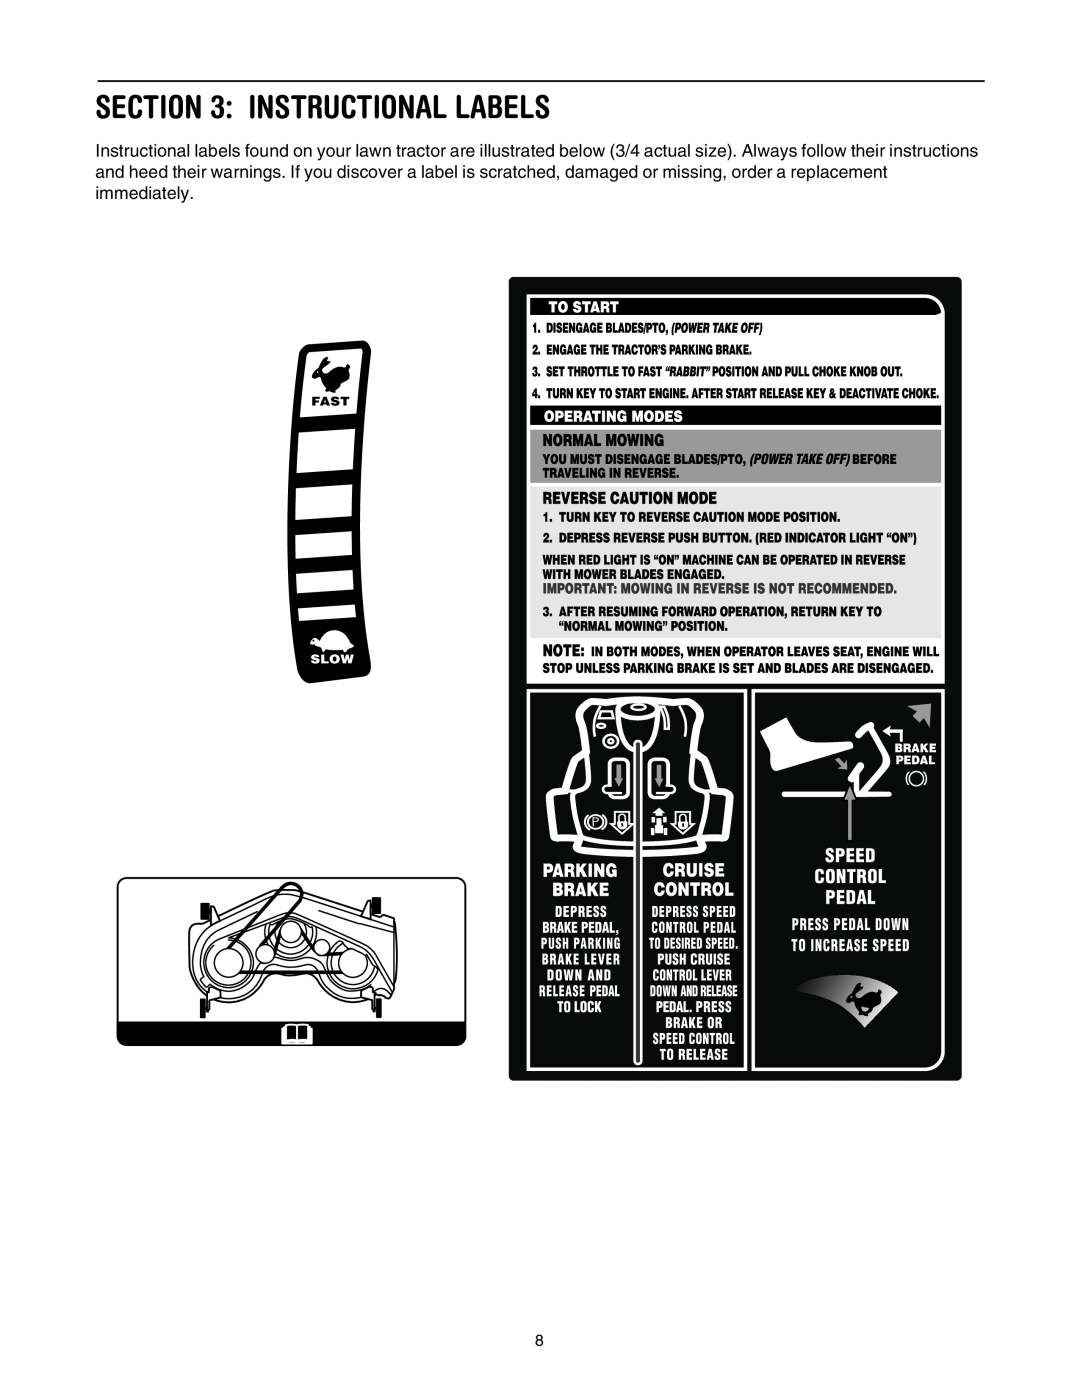 Toro LX500 manual Instructional Labels, Fast, Slow 